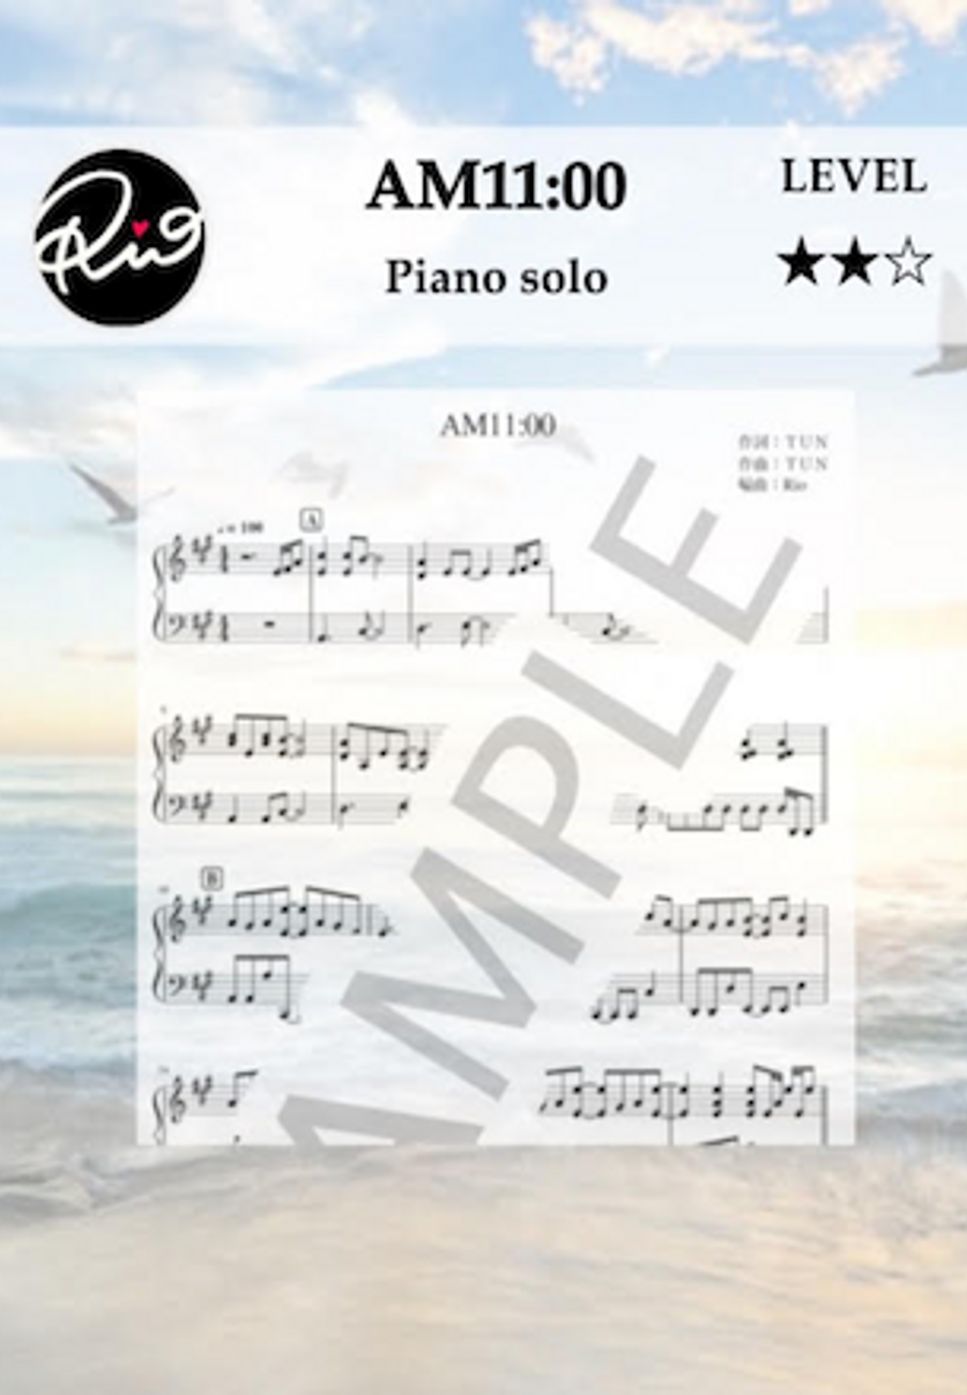 HY - AM11:00 (ピアノソロ) by Rio